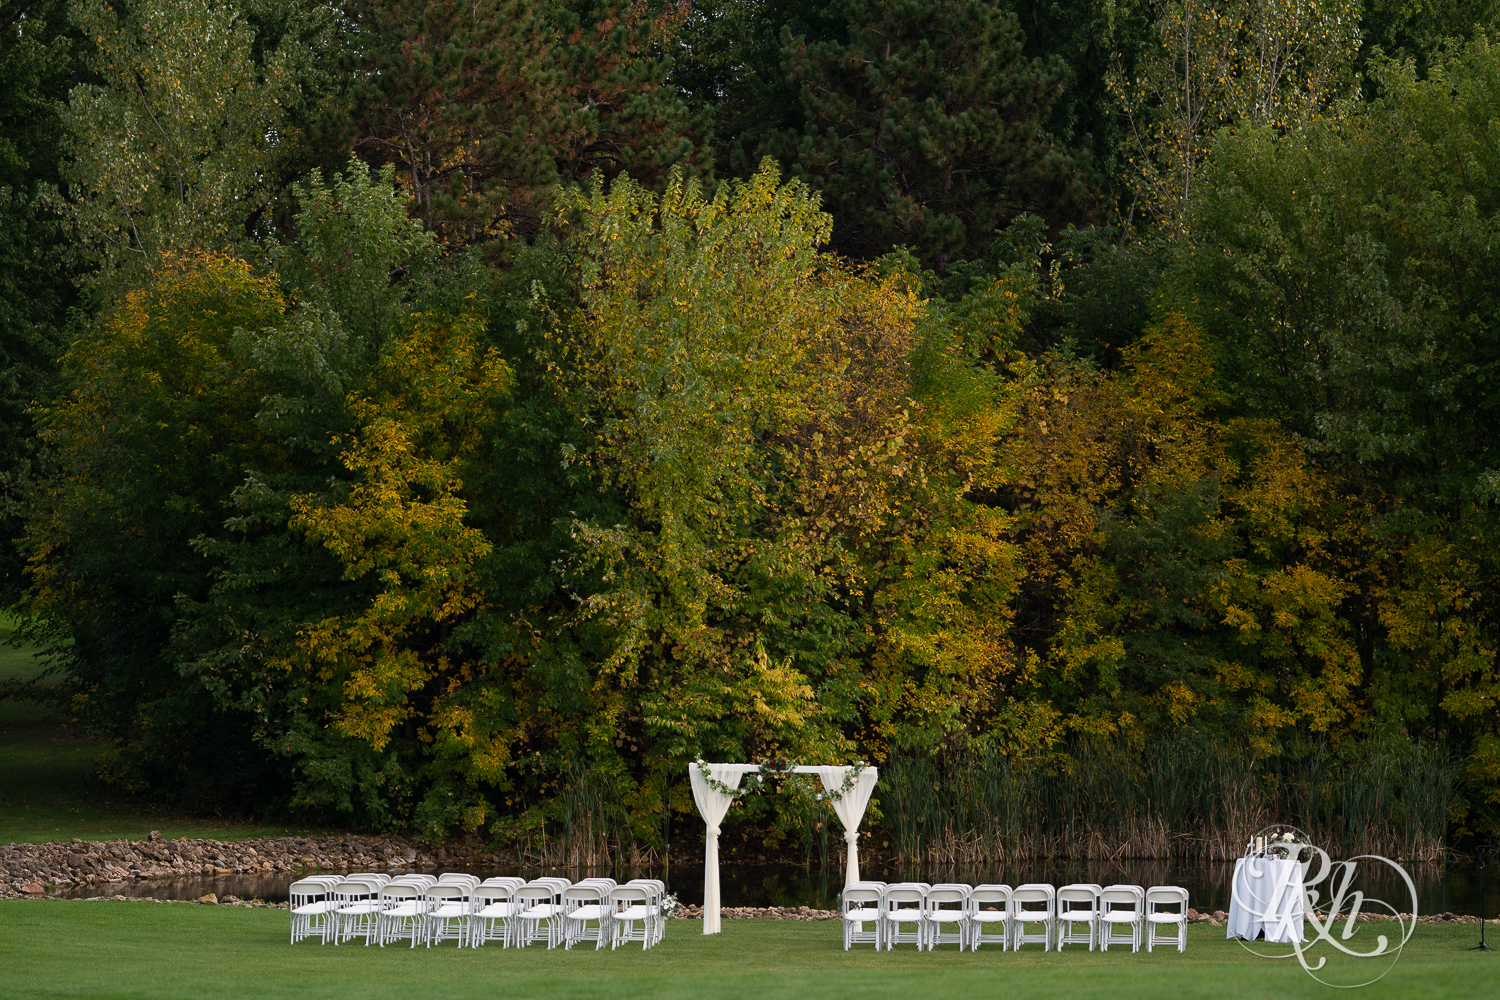 Outdoor wedding ceremony setup at Hastings Golf Club in Hastings, Minnesota.